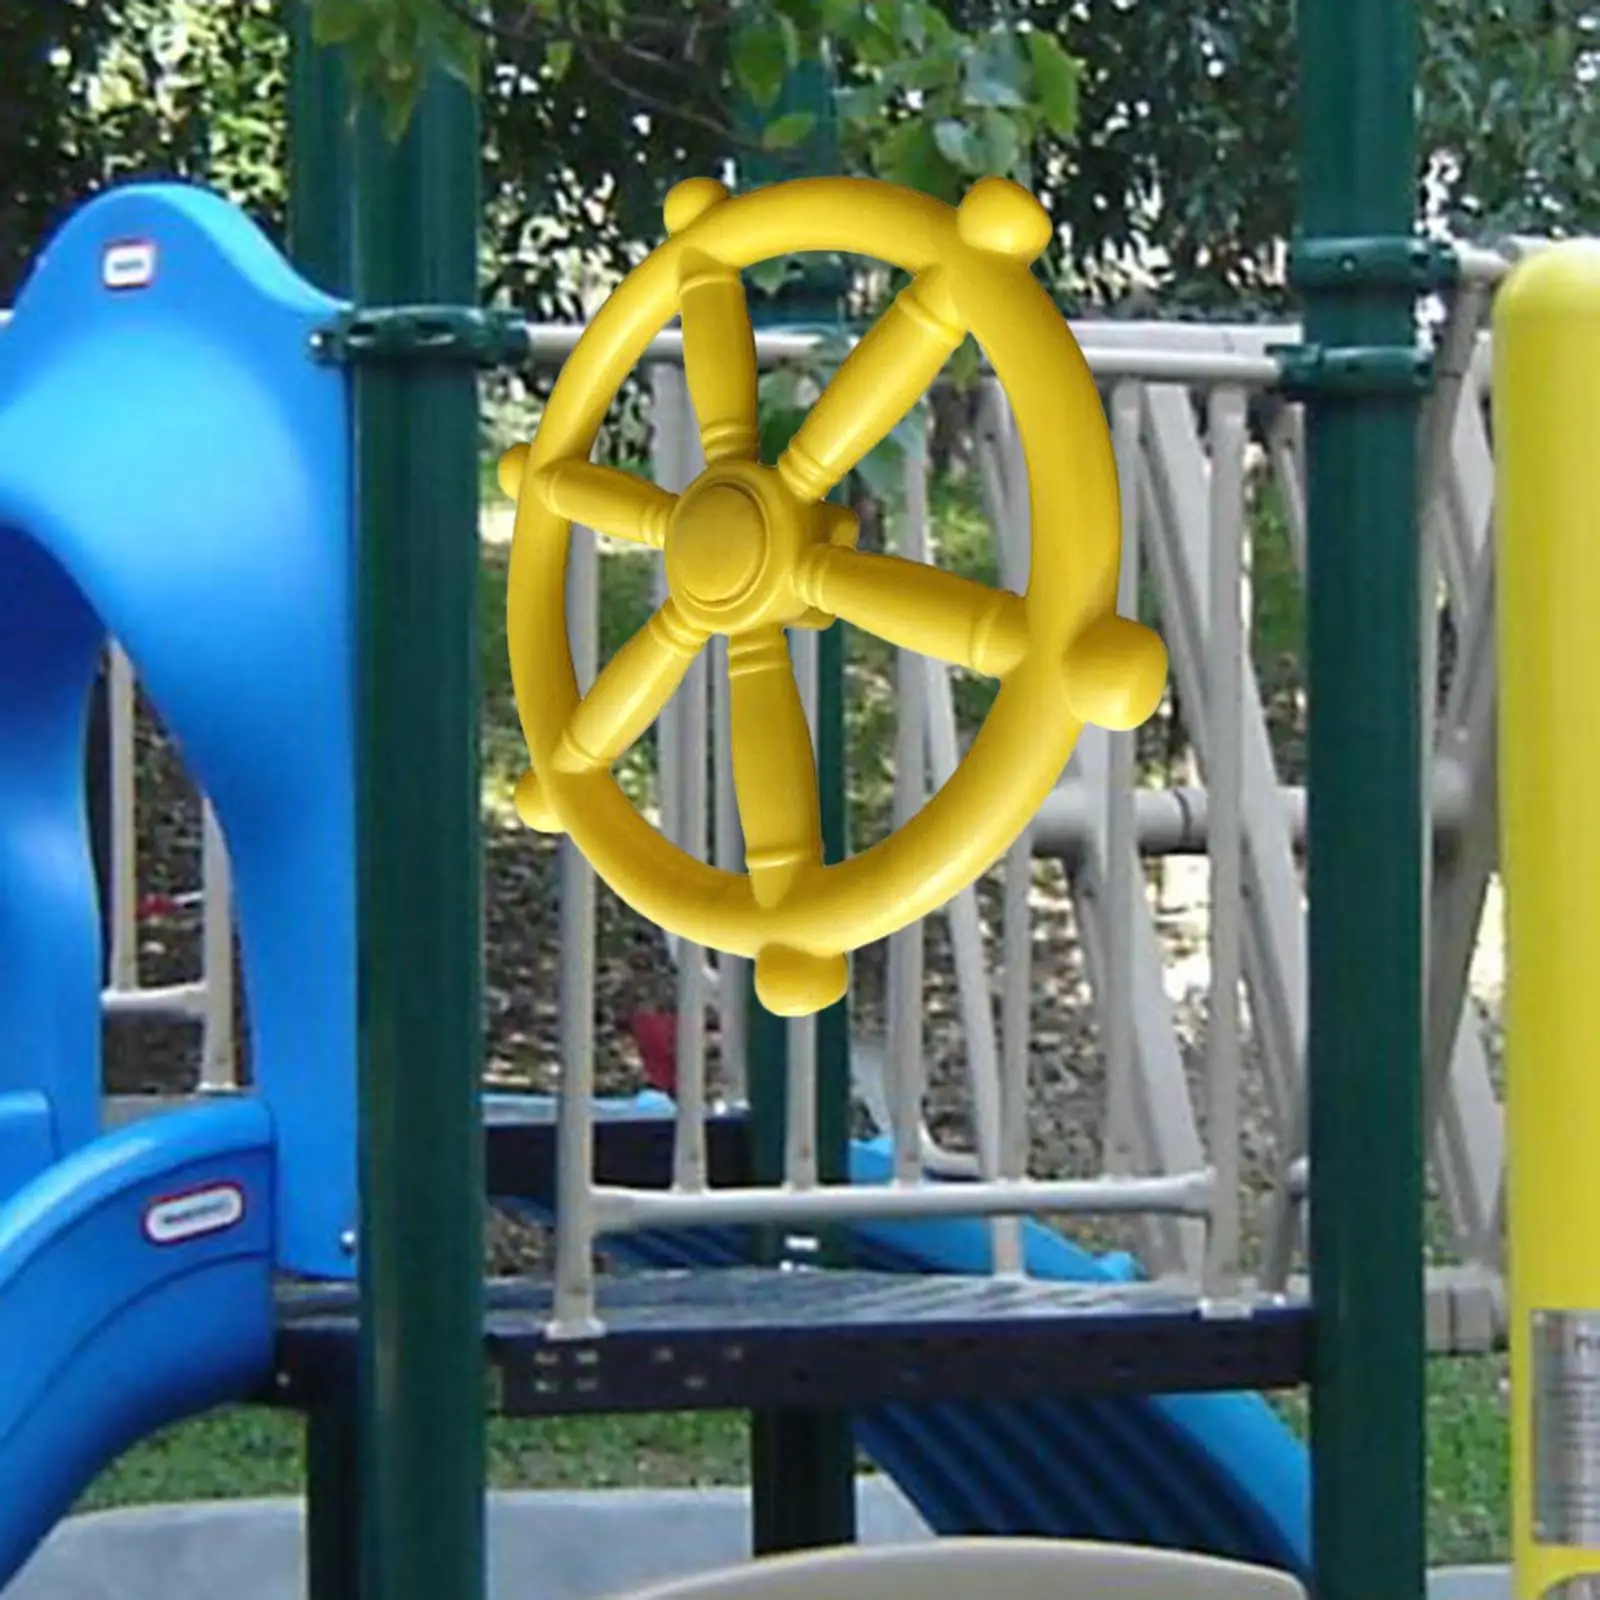 Pirate Ship Wheel Multipurpose Kids Steering Wheel Toy Jungle Gym Steering Wheel for Park Outdoor Garden Playhouse Tree House